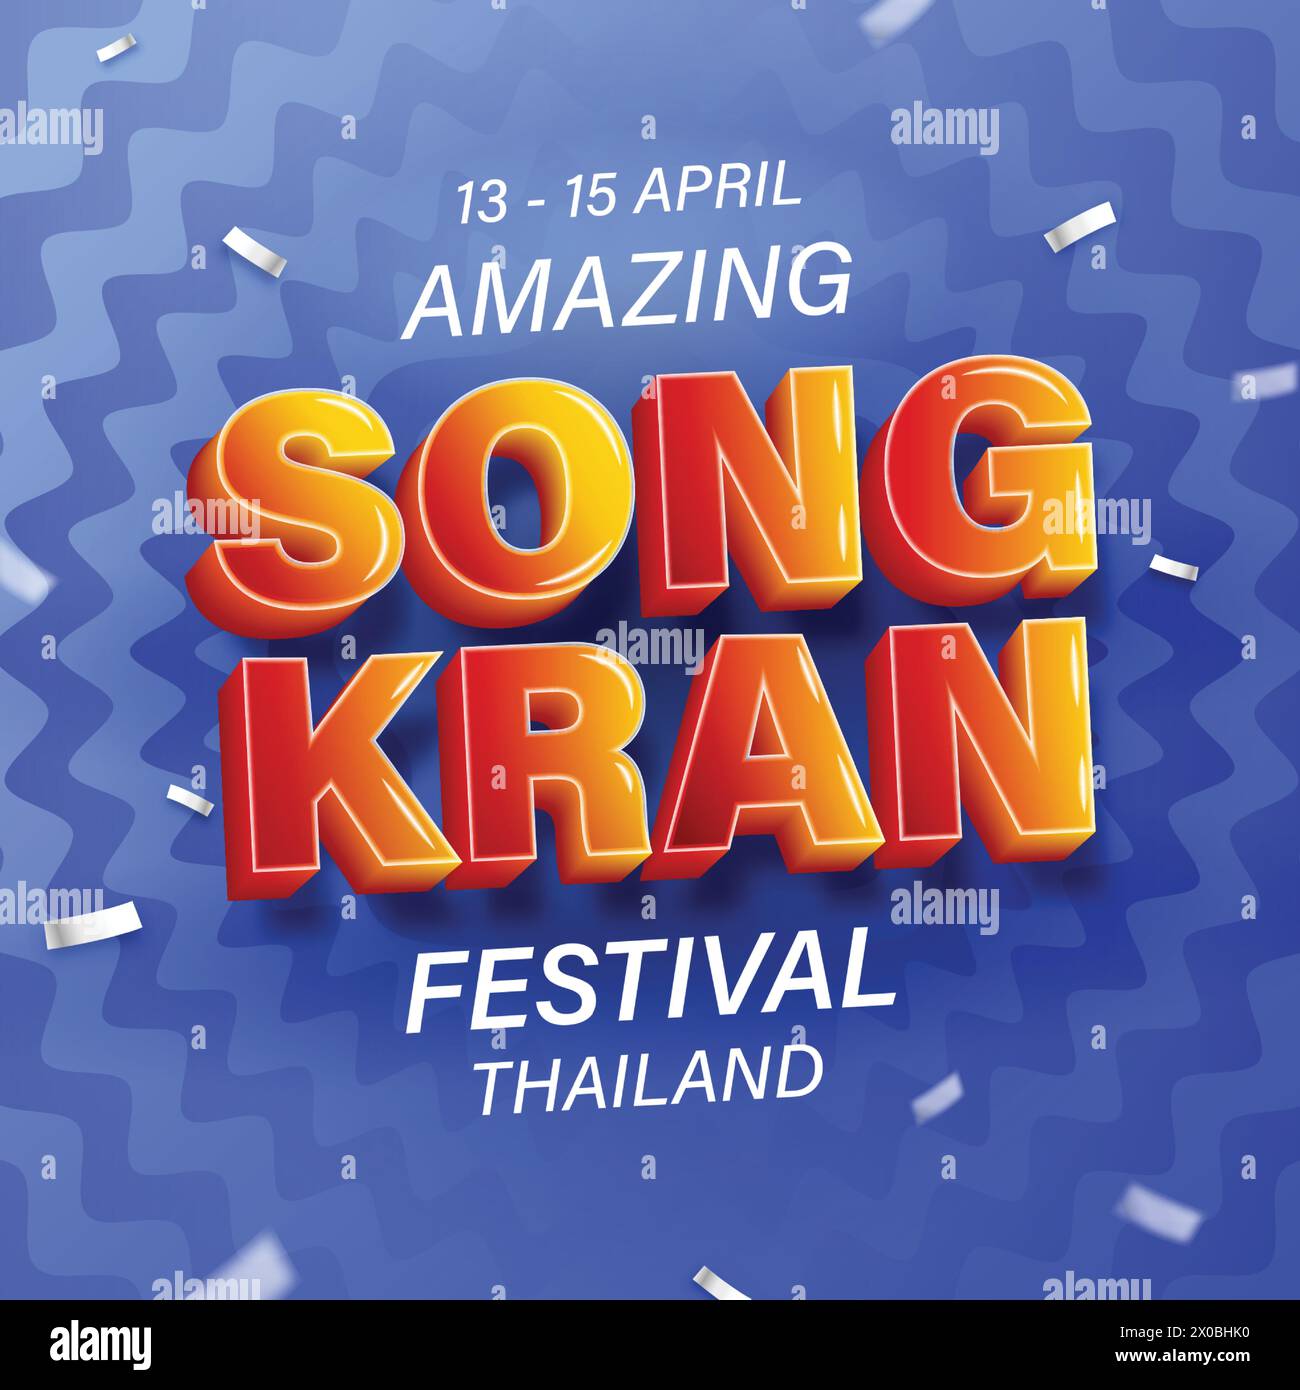 Amazing Songkran festival Thailand poster design in blue water wavy background, vector illustration Stock Vector